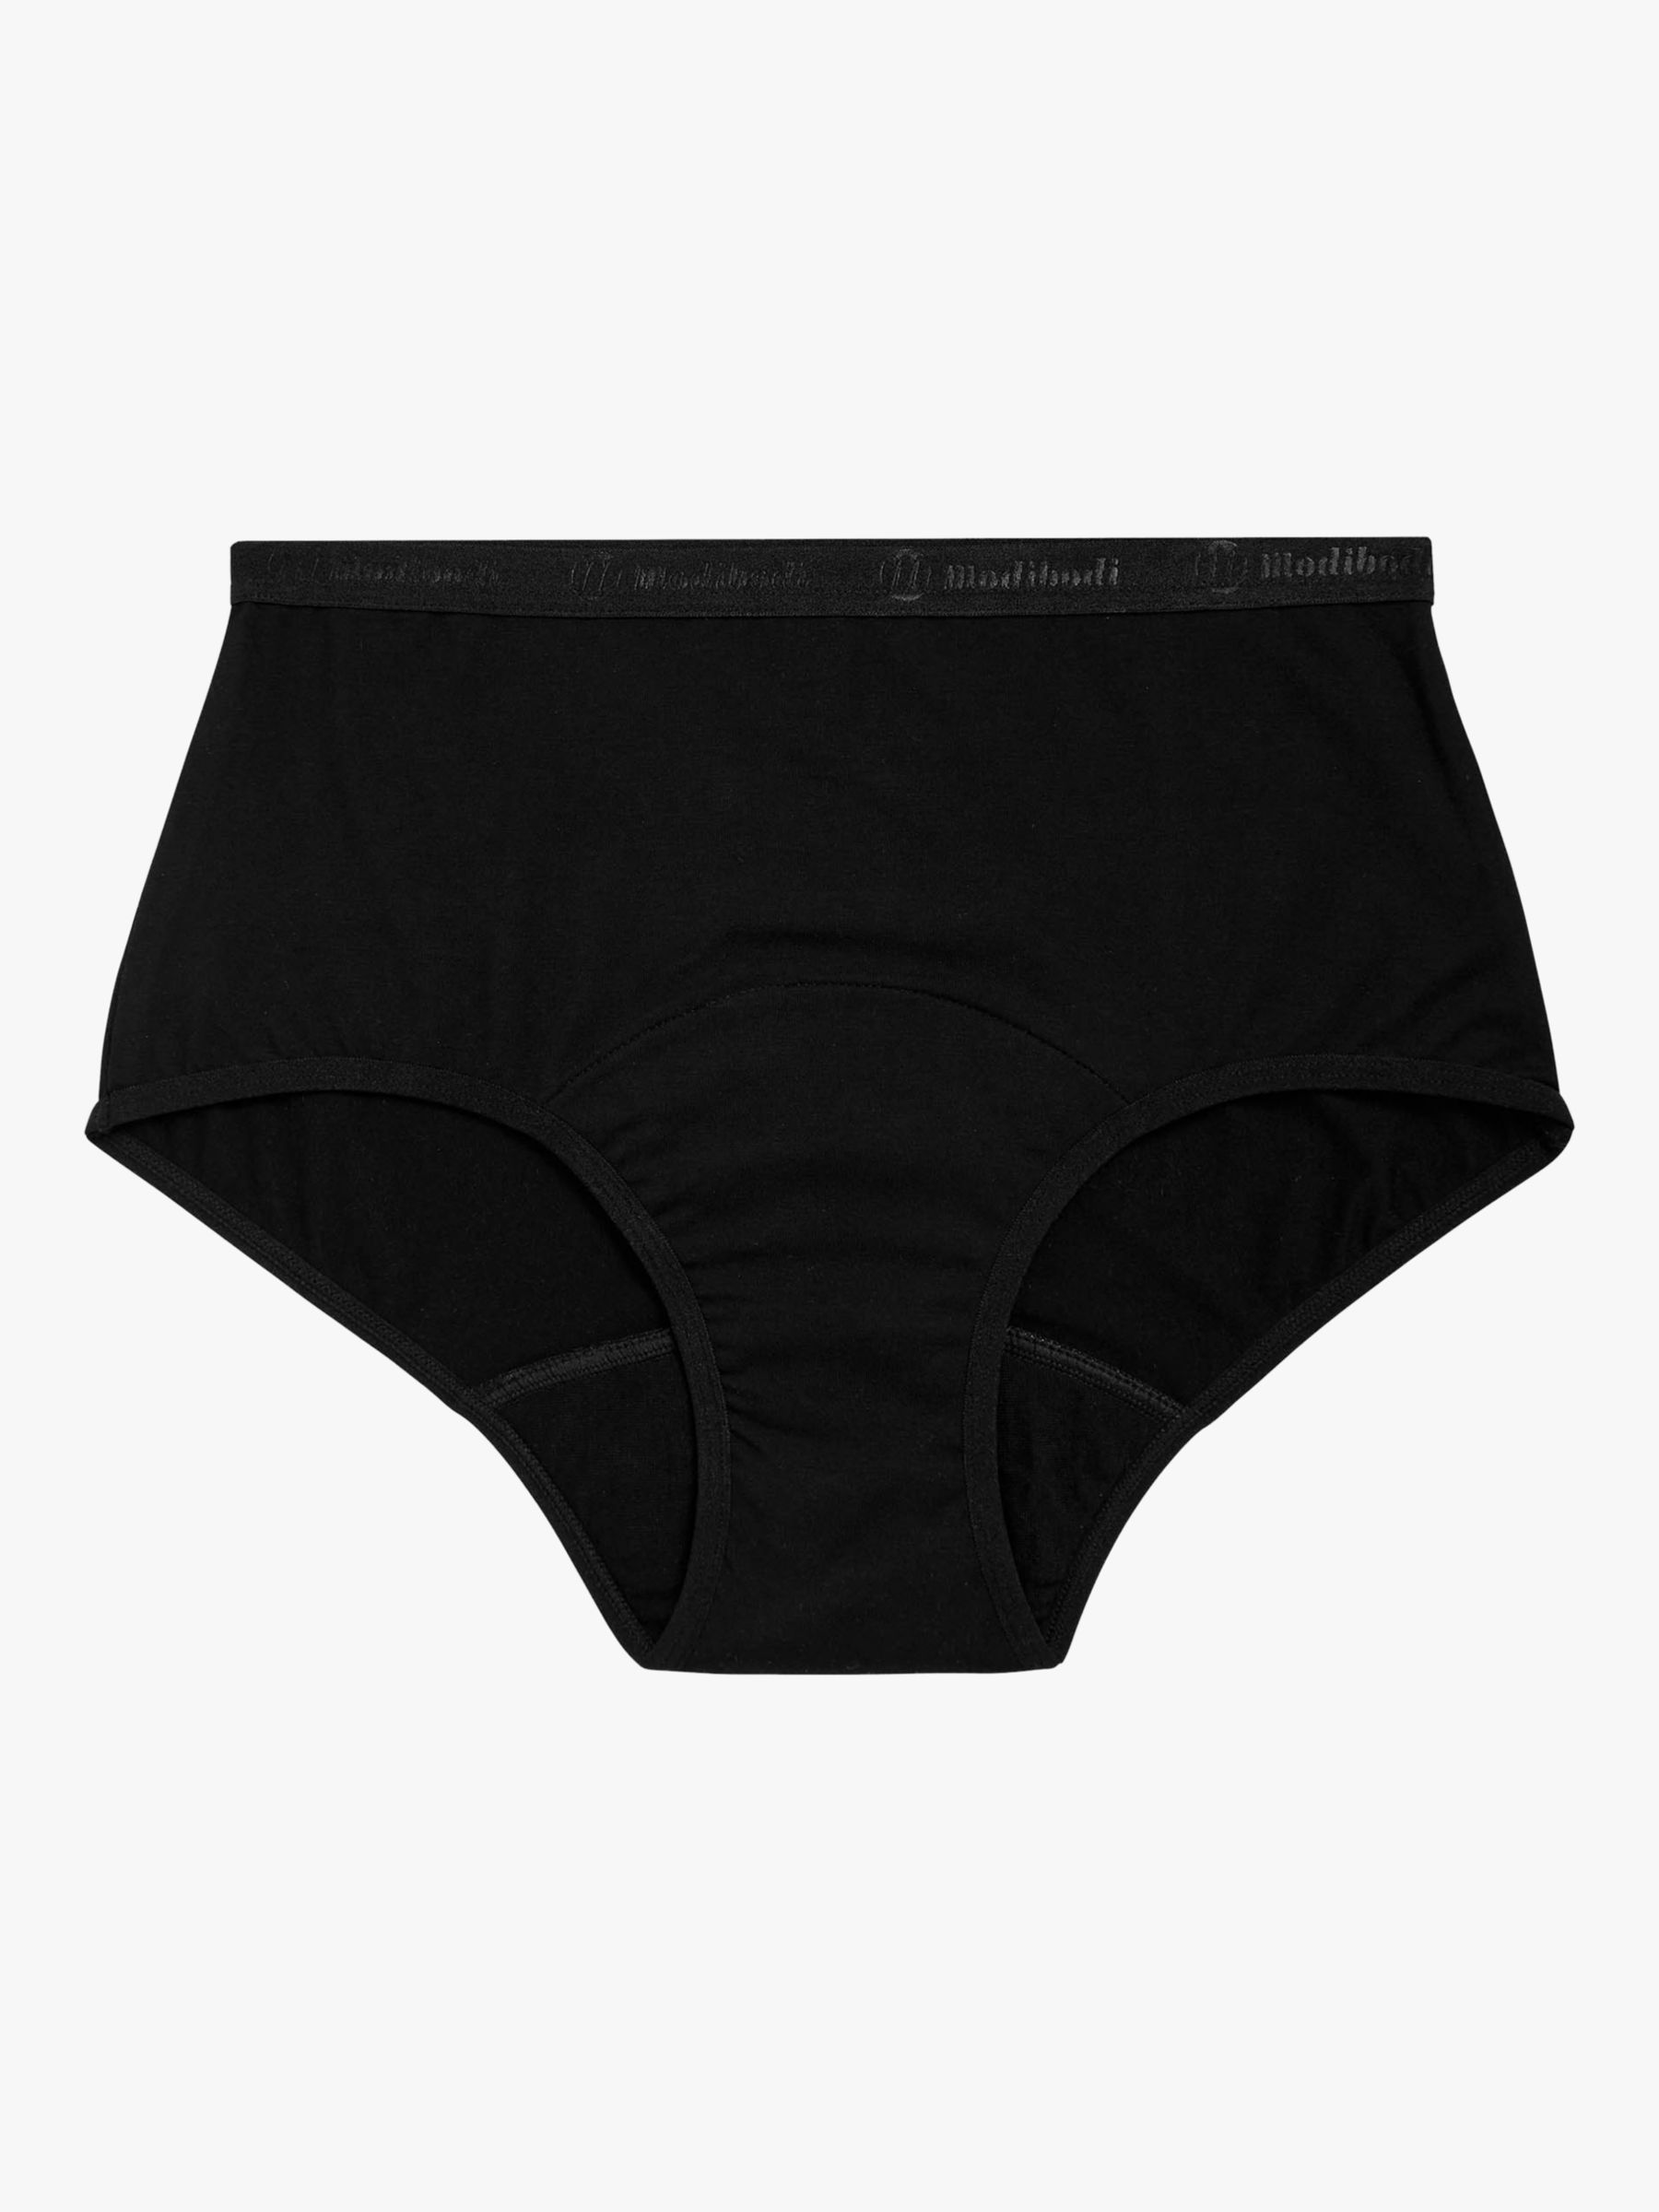 Modibodi Modibodi Period Underwear Classic Bikini Maxi-24hrs Black